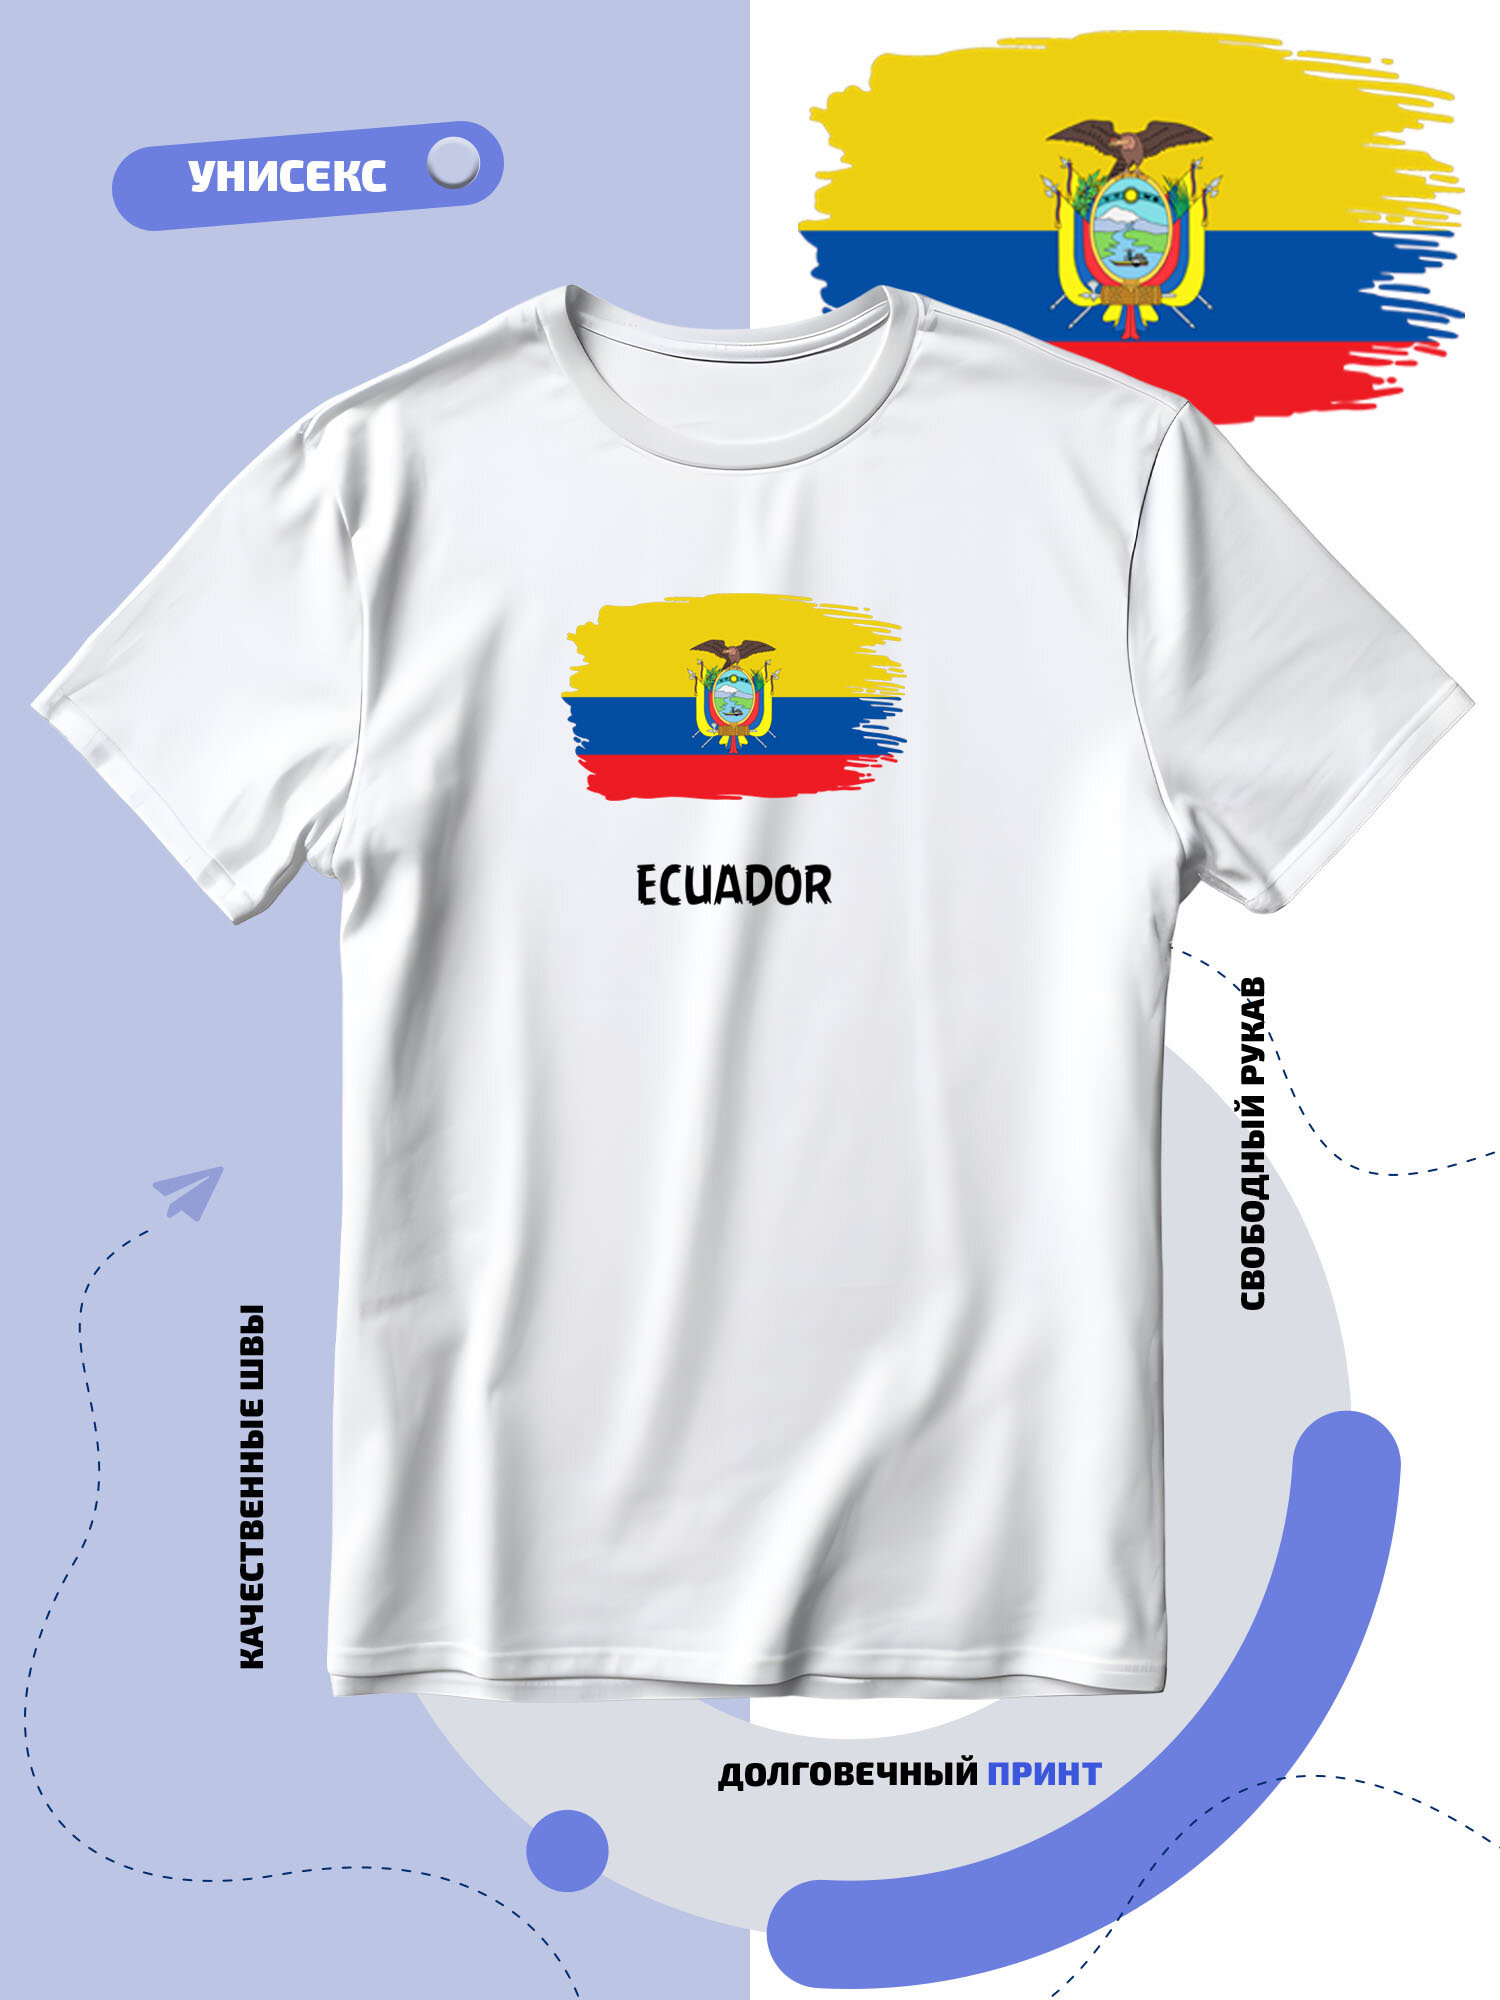 Футболка SMAIL-P с флагом Эквадора-Ecuador